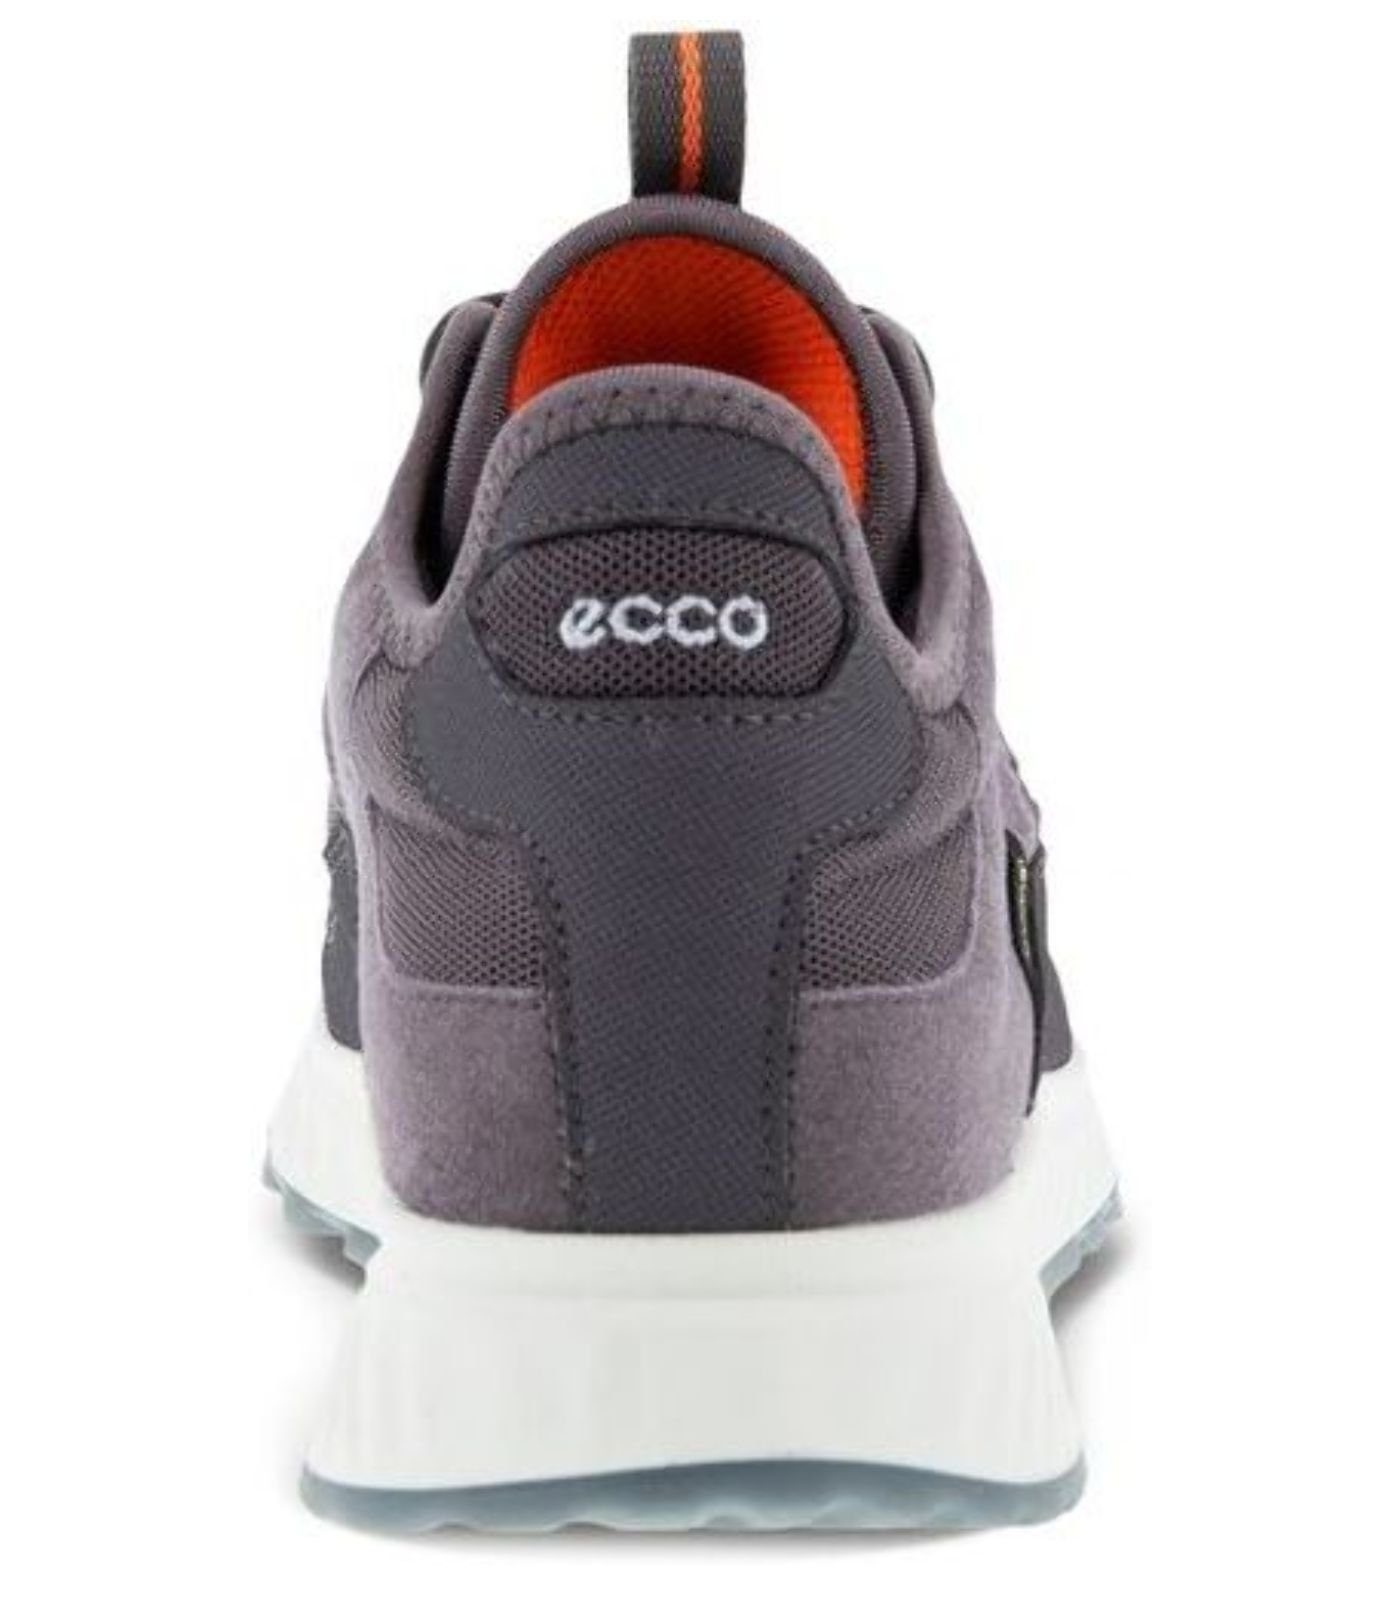 Lederimitat/Textil grau Sneaker Sneaker Ecco